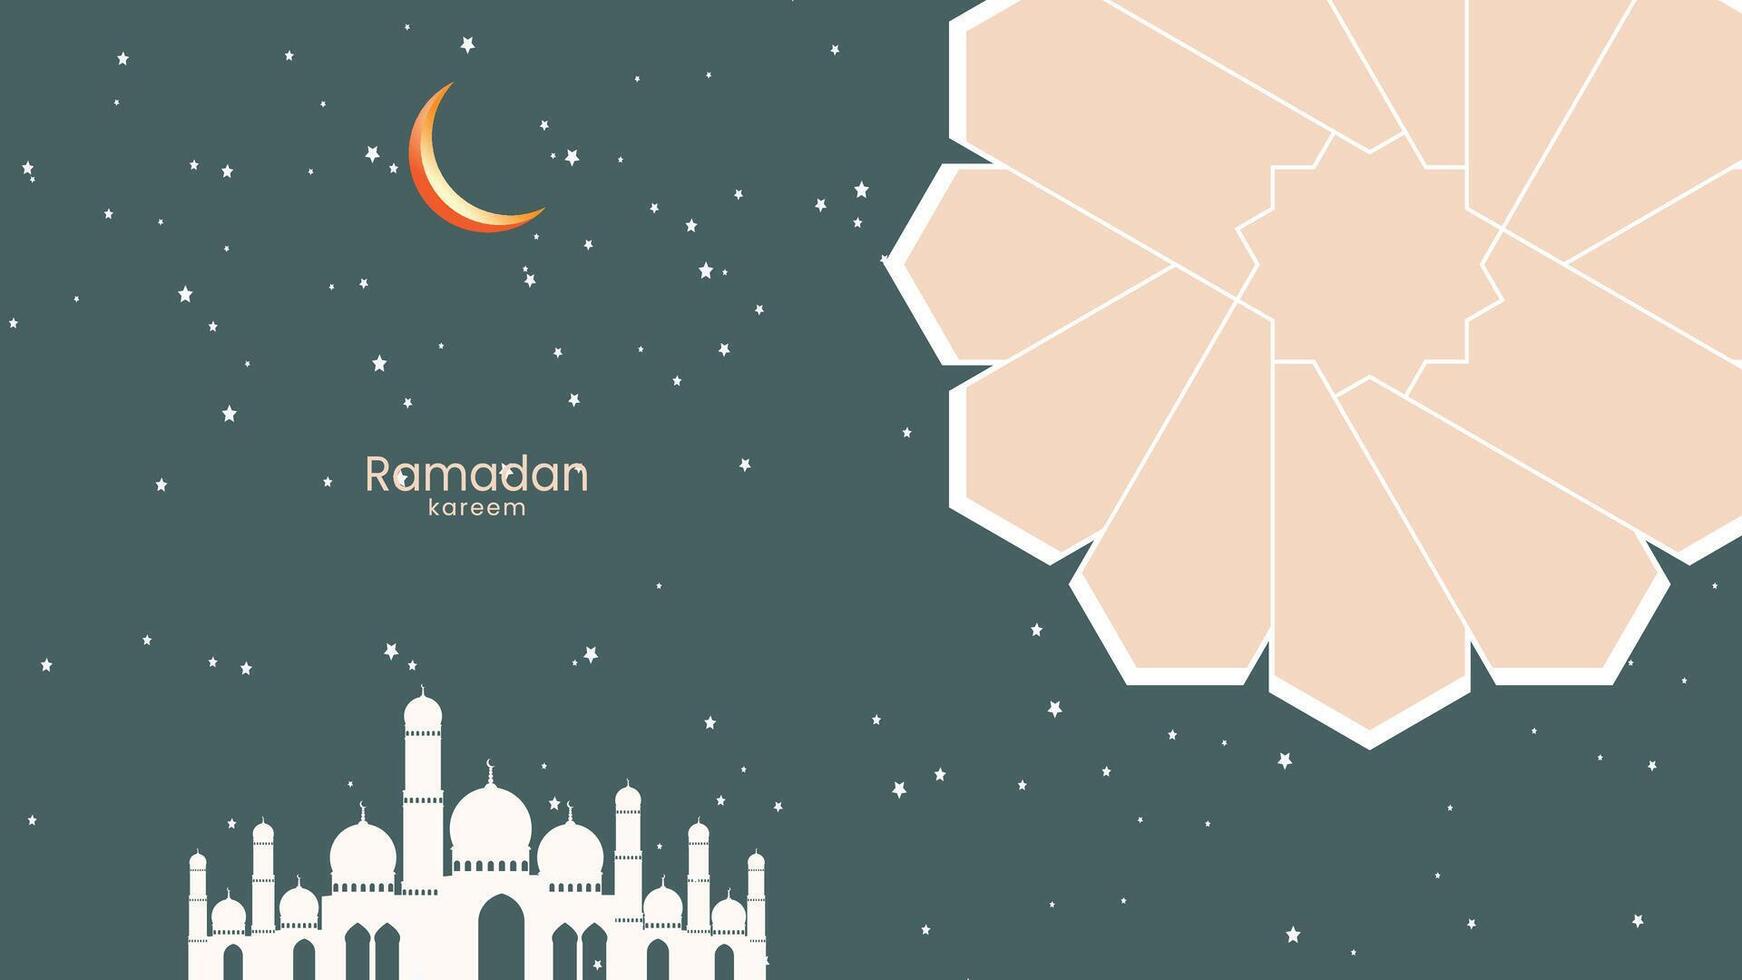 Ramadan kareem vector illustration, ramadan holiday celebration background, isolated in green